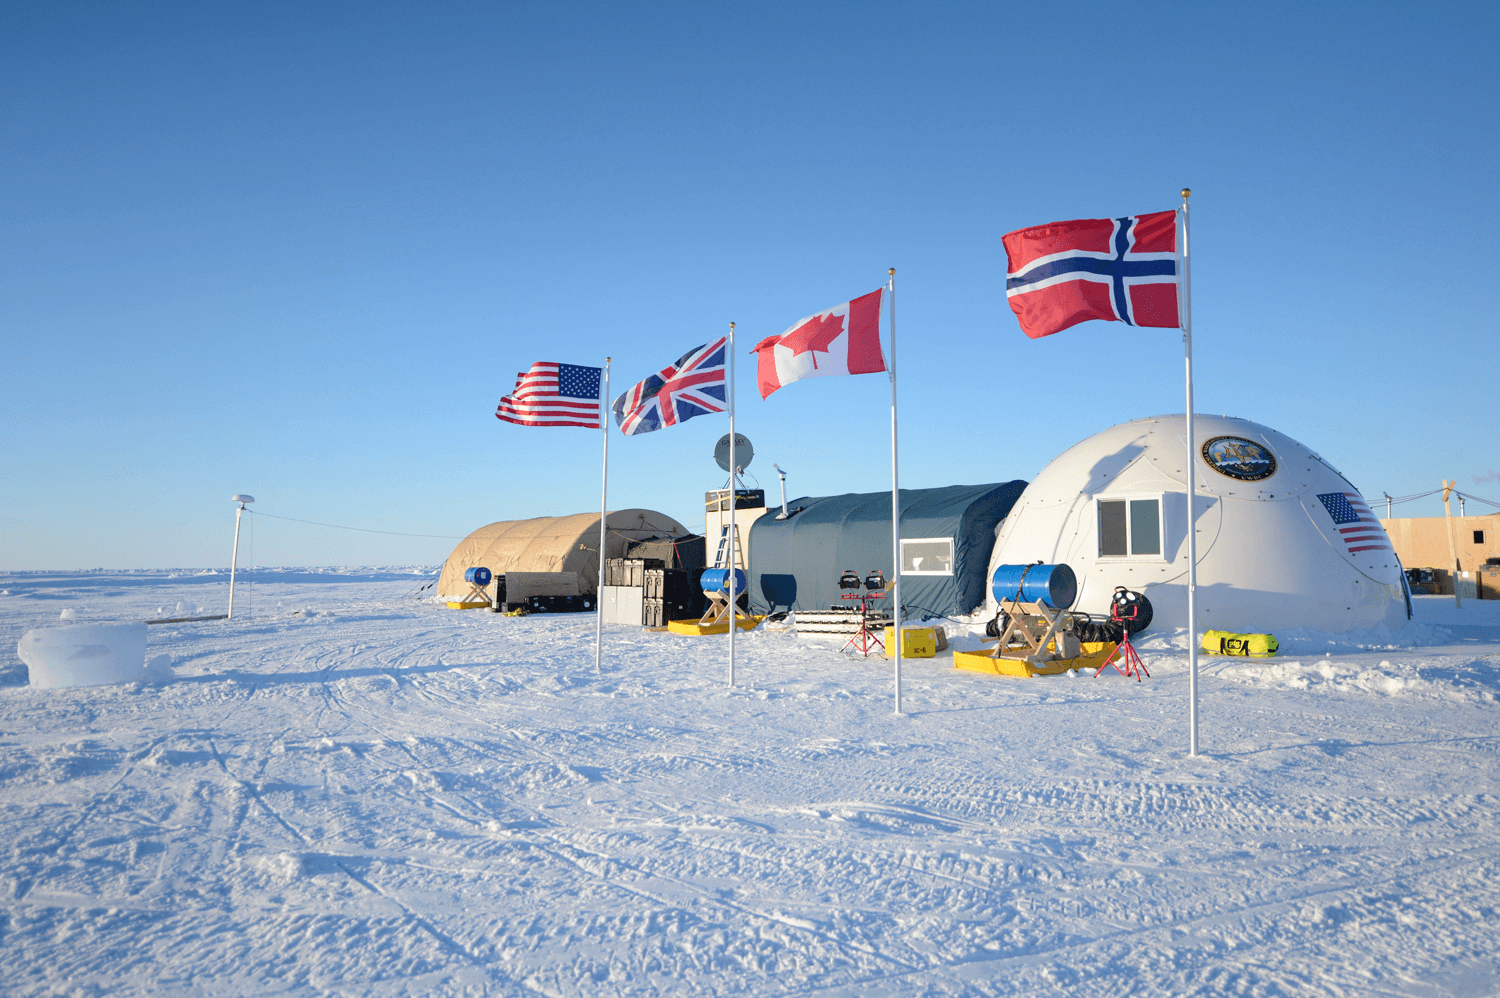 US NAvy Camp Sargo during icex